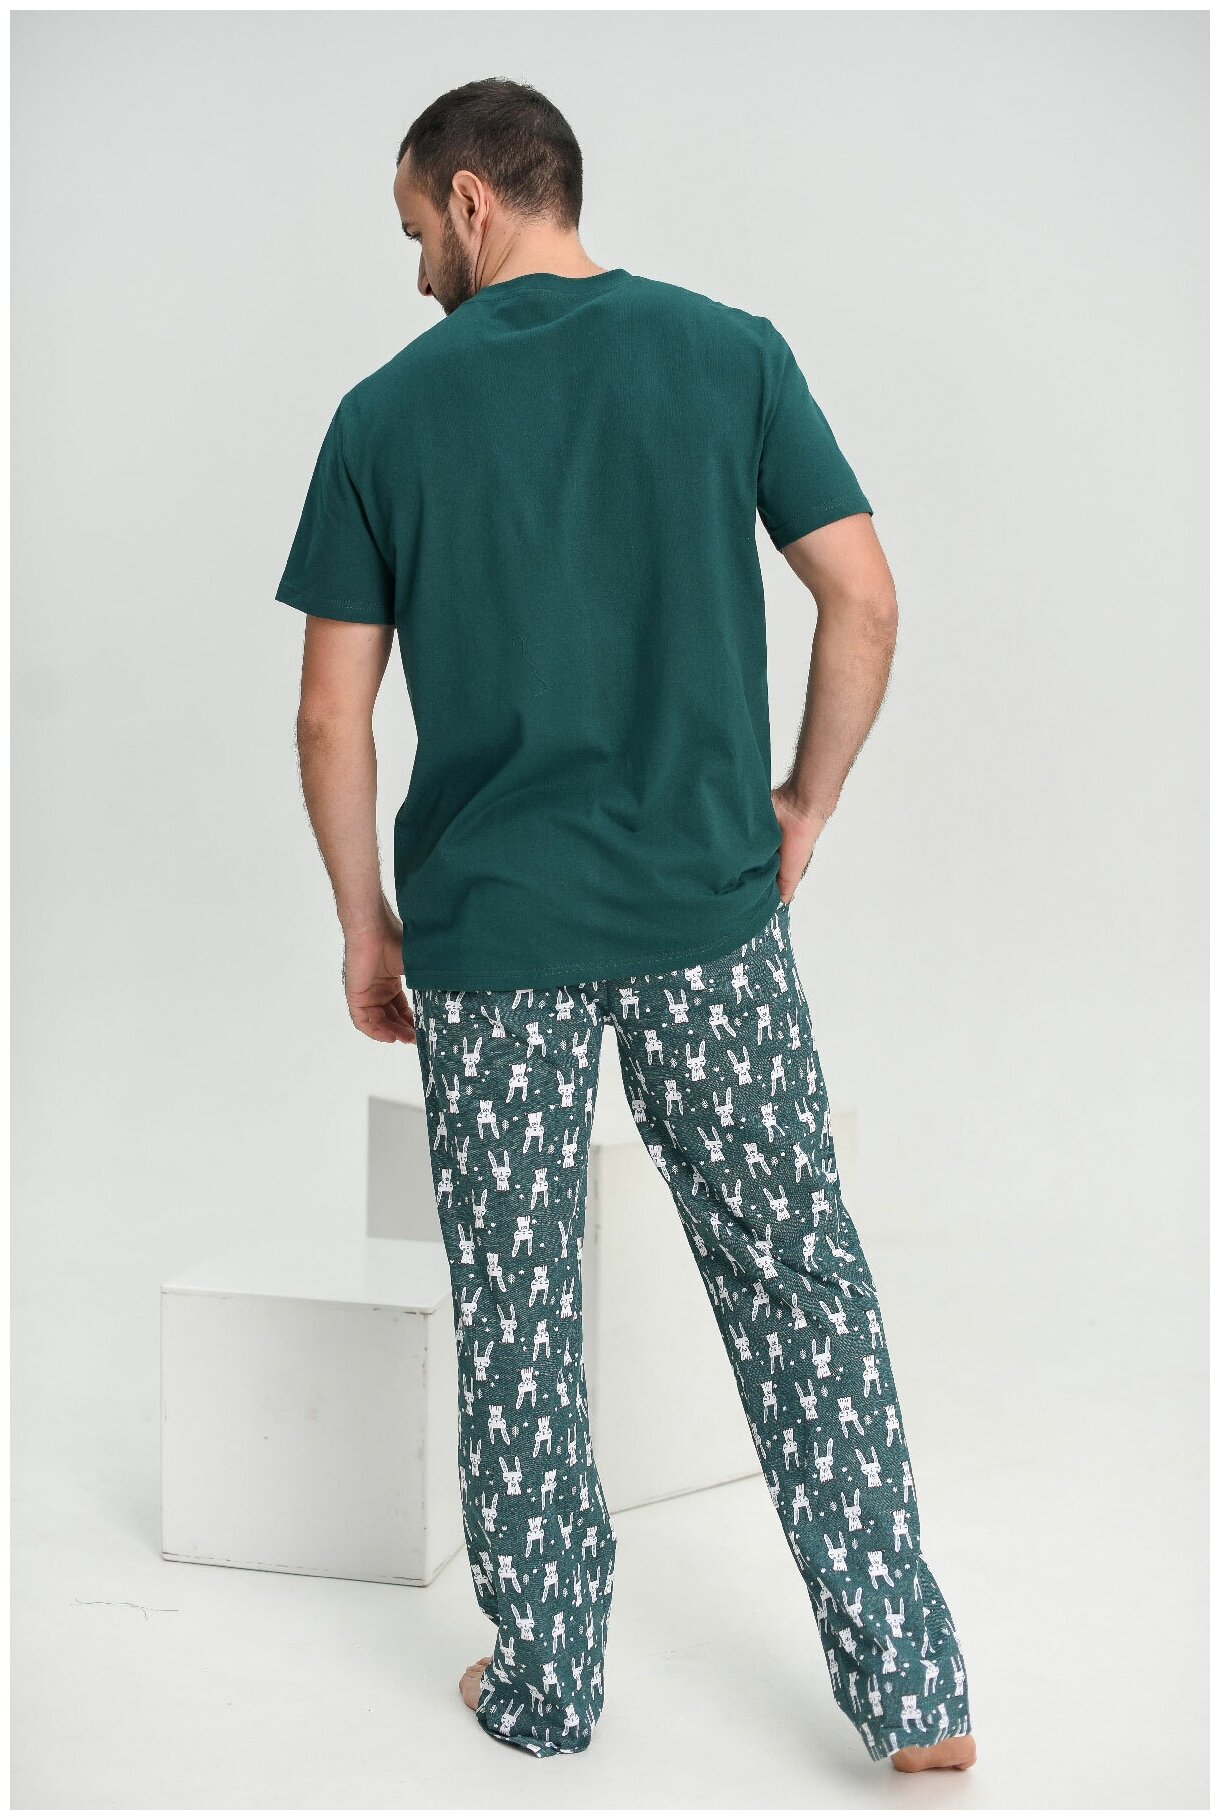 Мужская пижама Ушастик Темно-зеленый 56 Кулирка Оптима трикотаж - фотография № 6